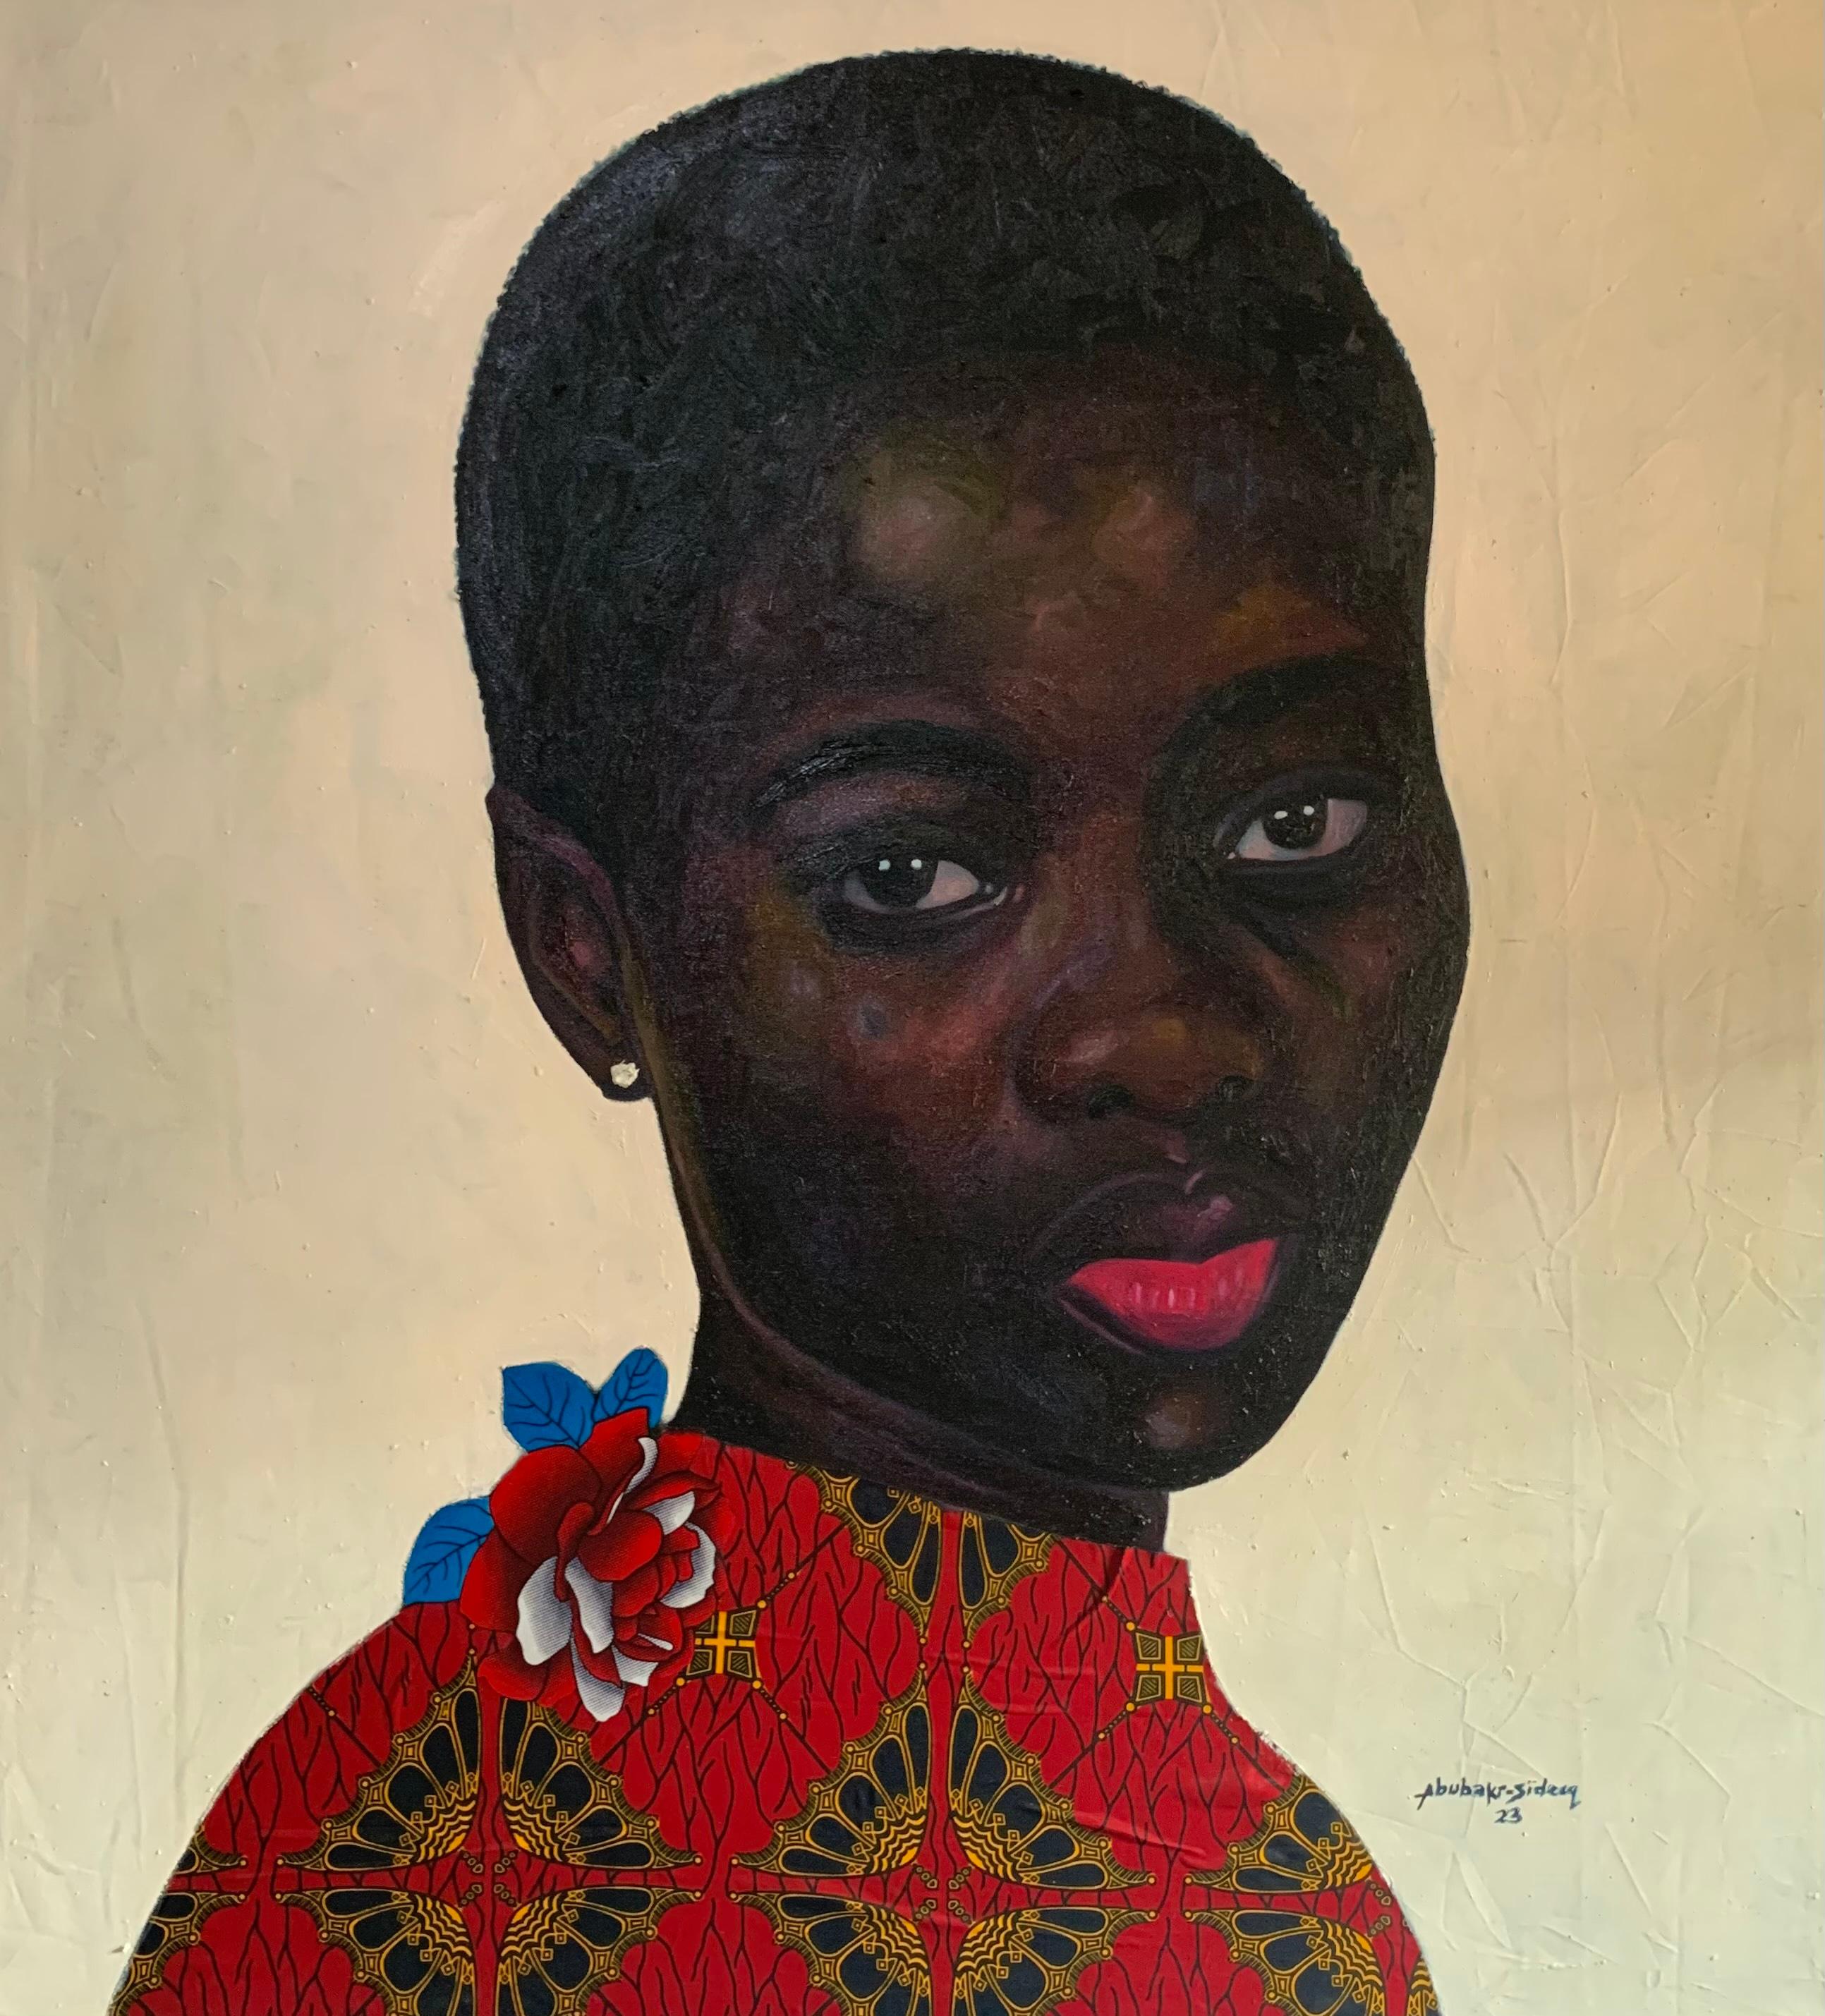 Bakare Abubakri-sideeq Babatunde Portrait Painting - Unchained Soul